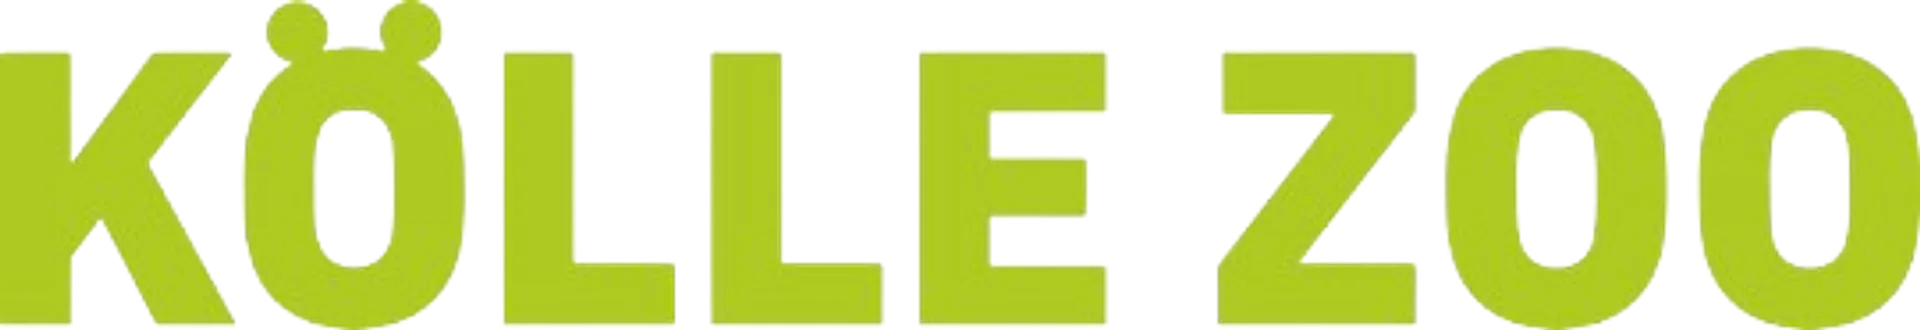 KÖLLE ZOO logo die aktuell Flugblatt